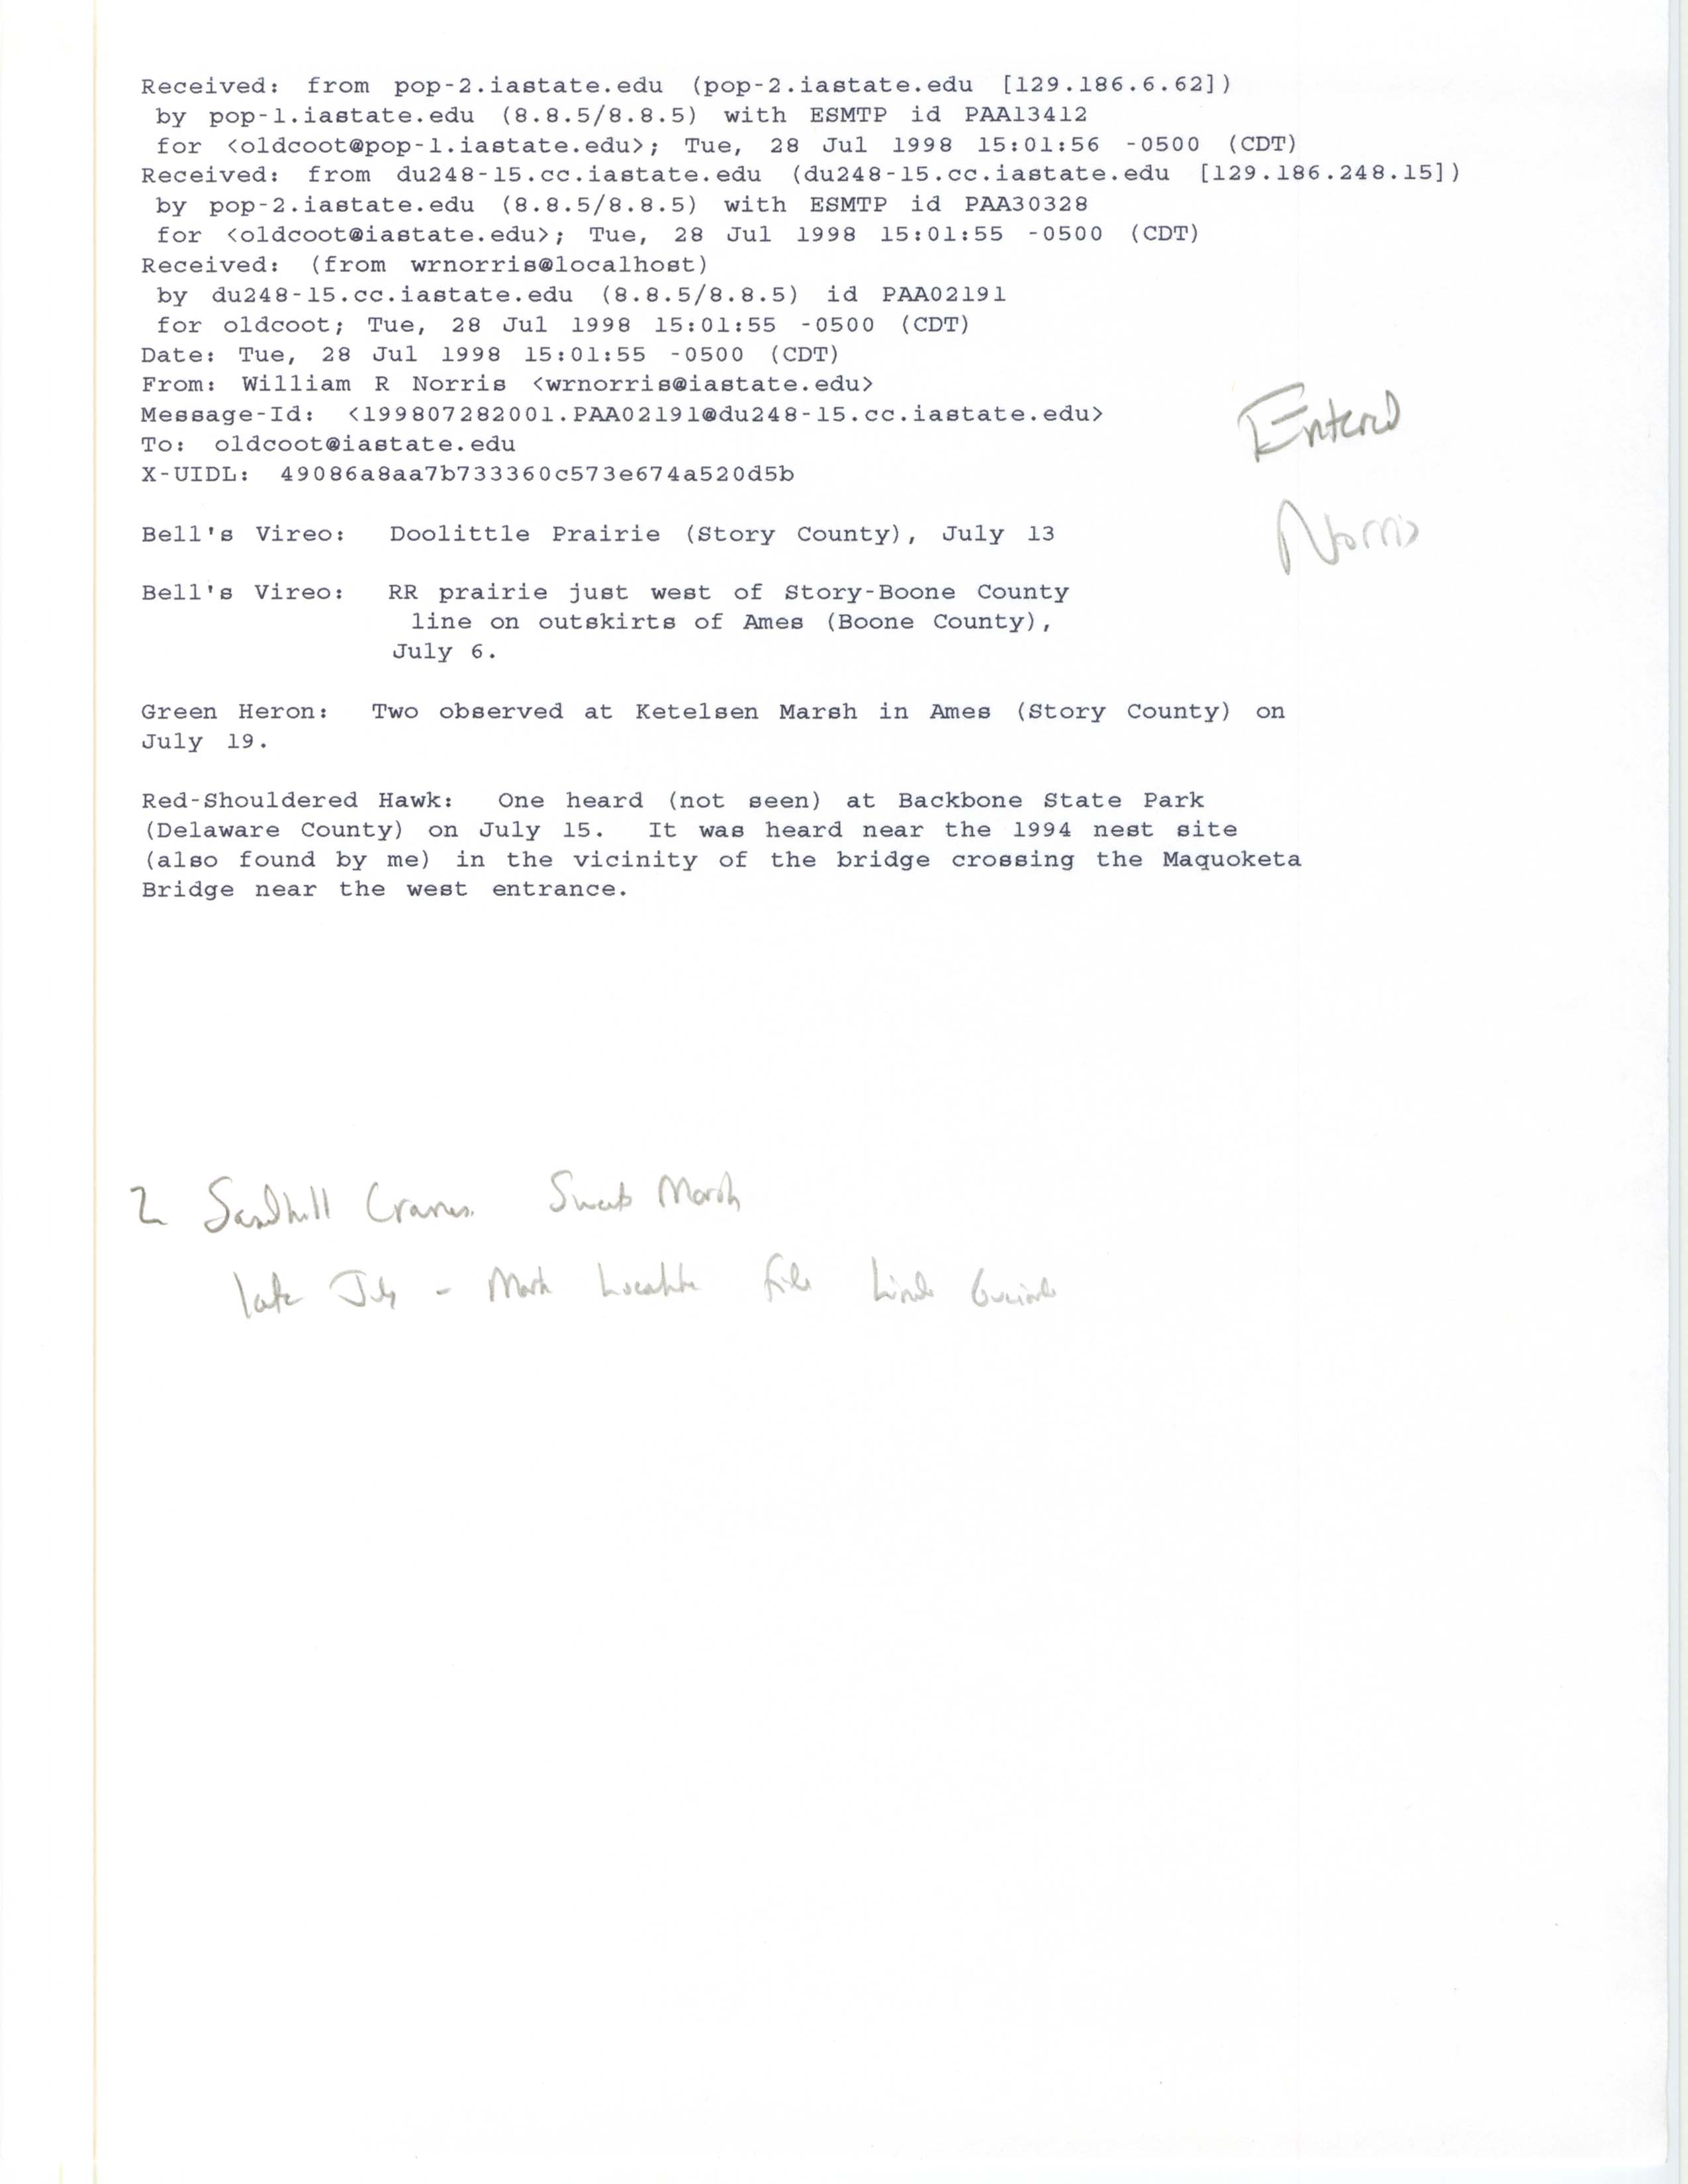 William Norris email to Jim Dinsmore regarding summer bird reports, July 28, 1998